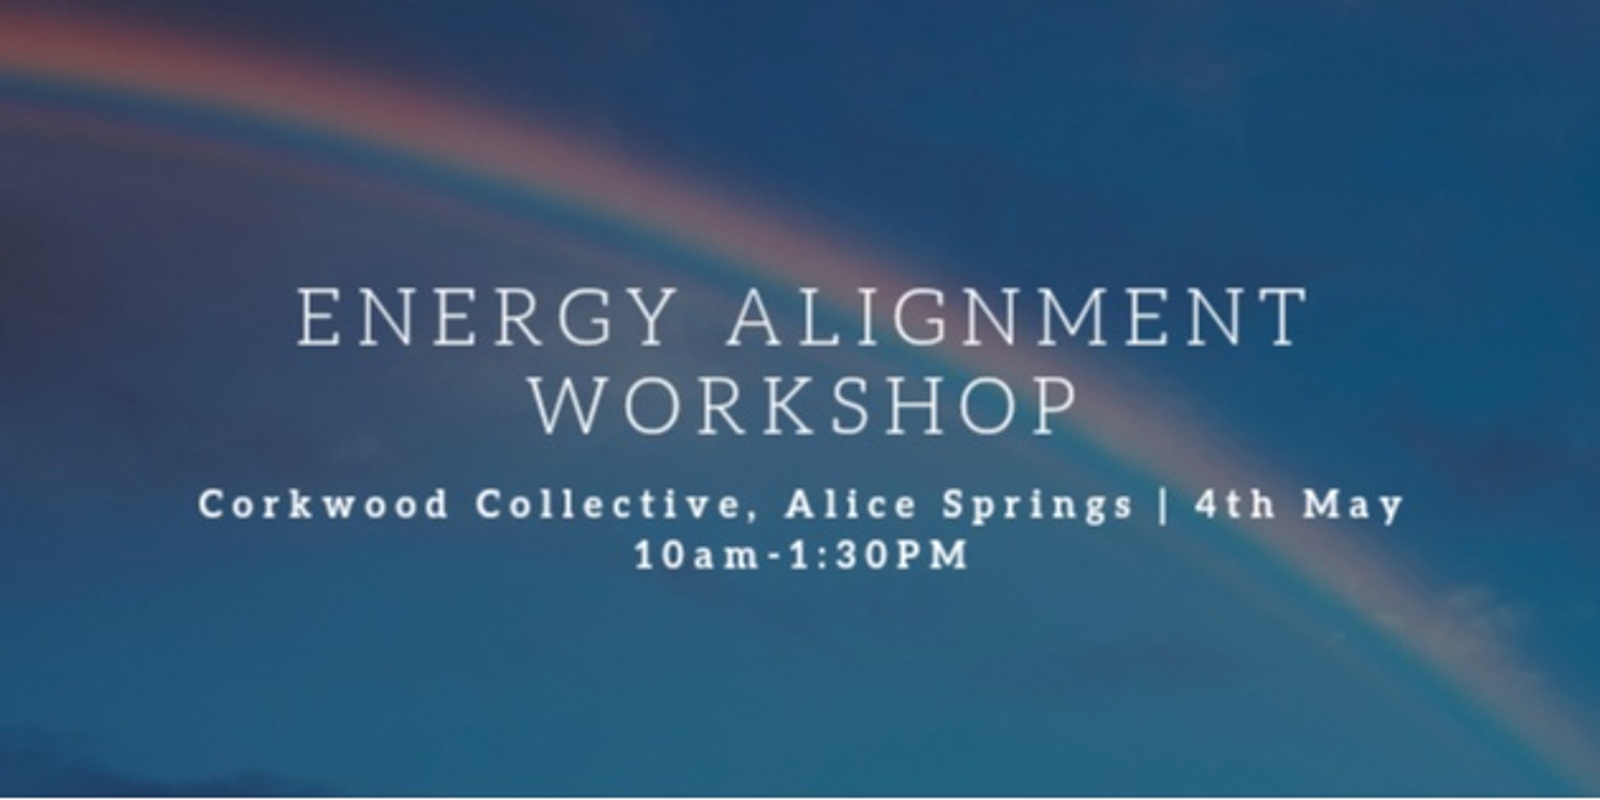 Banner image for Energy Alignment workshop